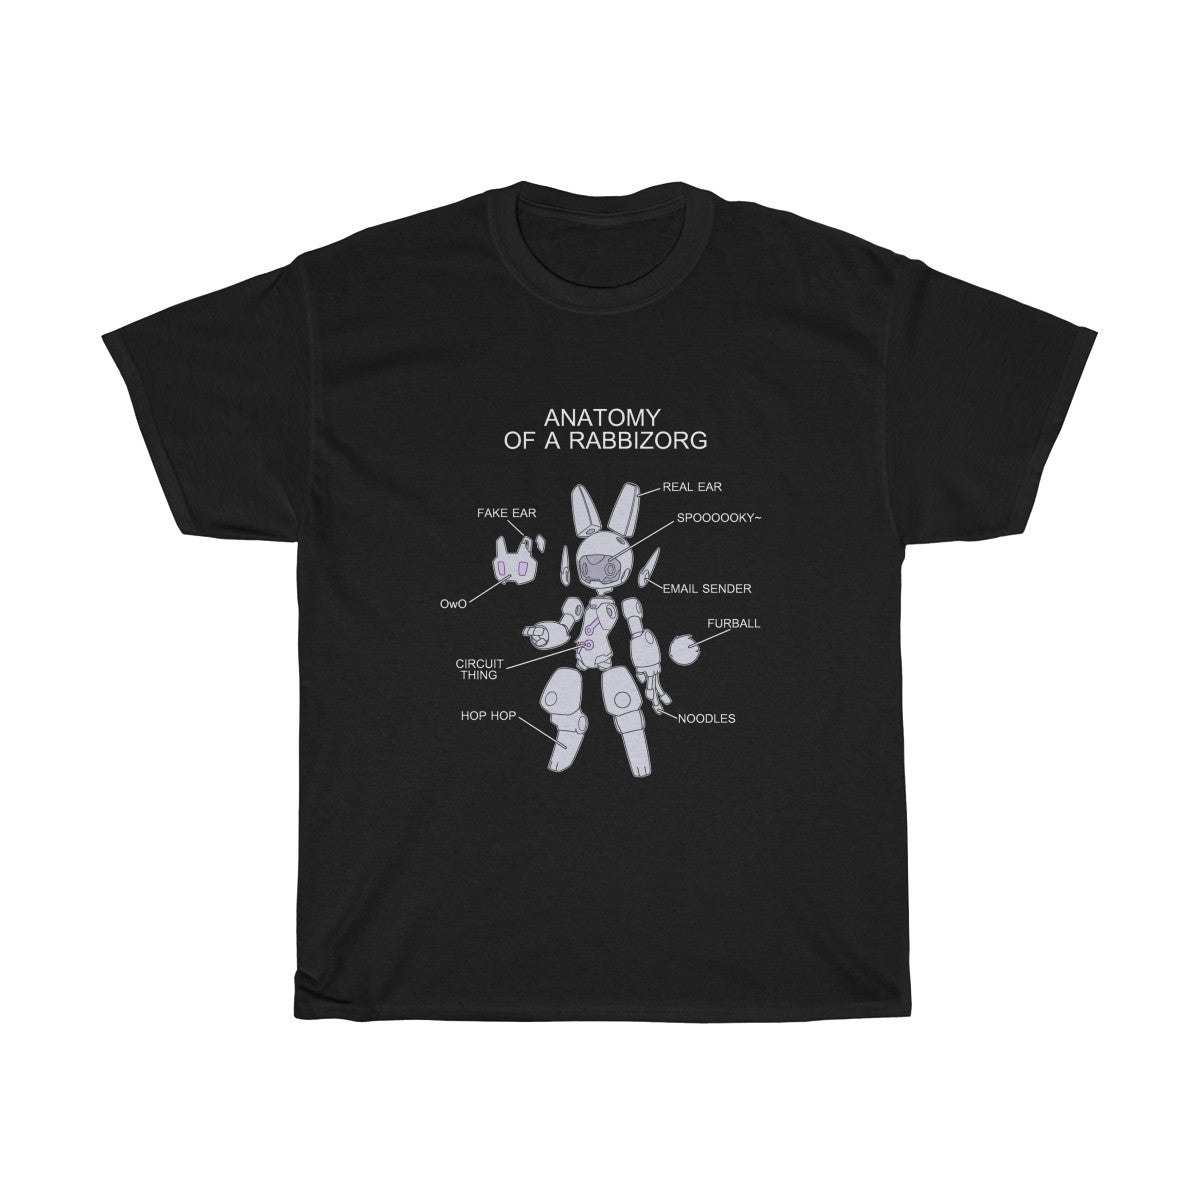 Anatomy of a Rabbizorg - T-Shirt T-Shirt Lordyan Black S 